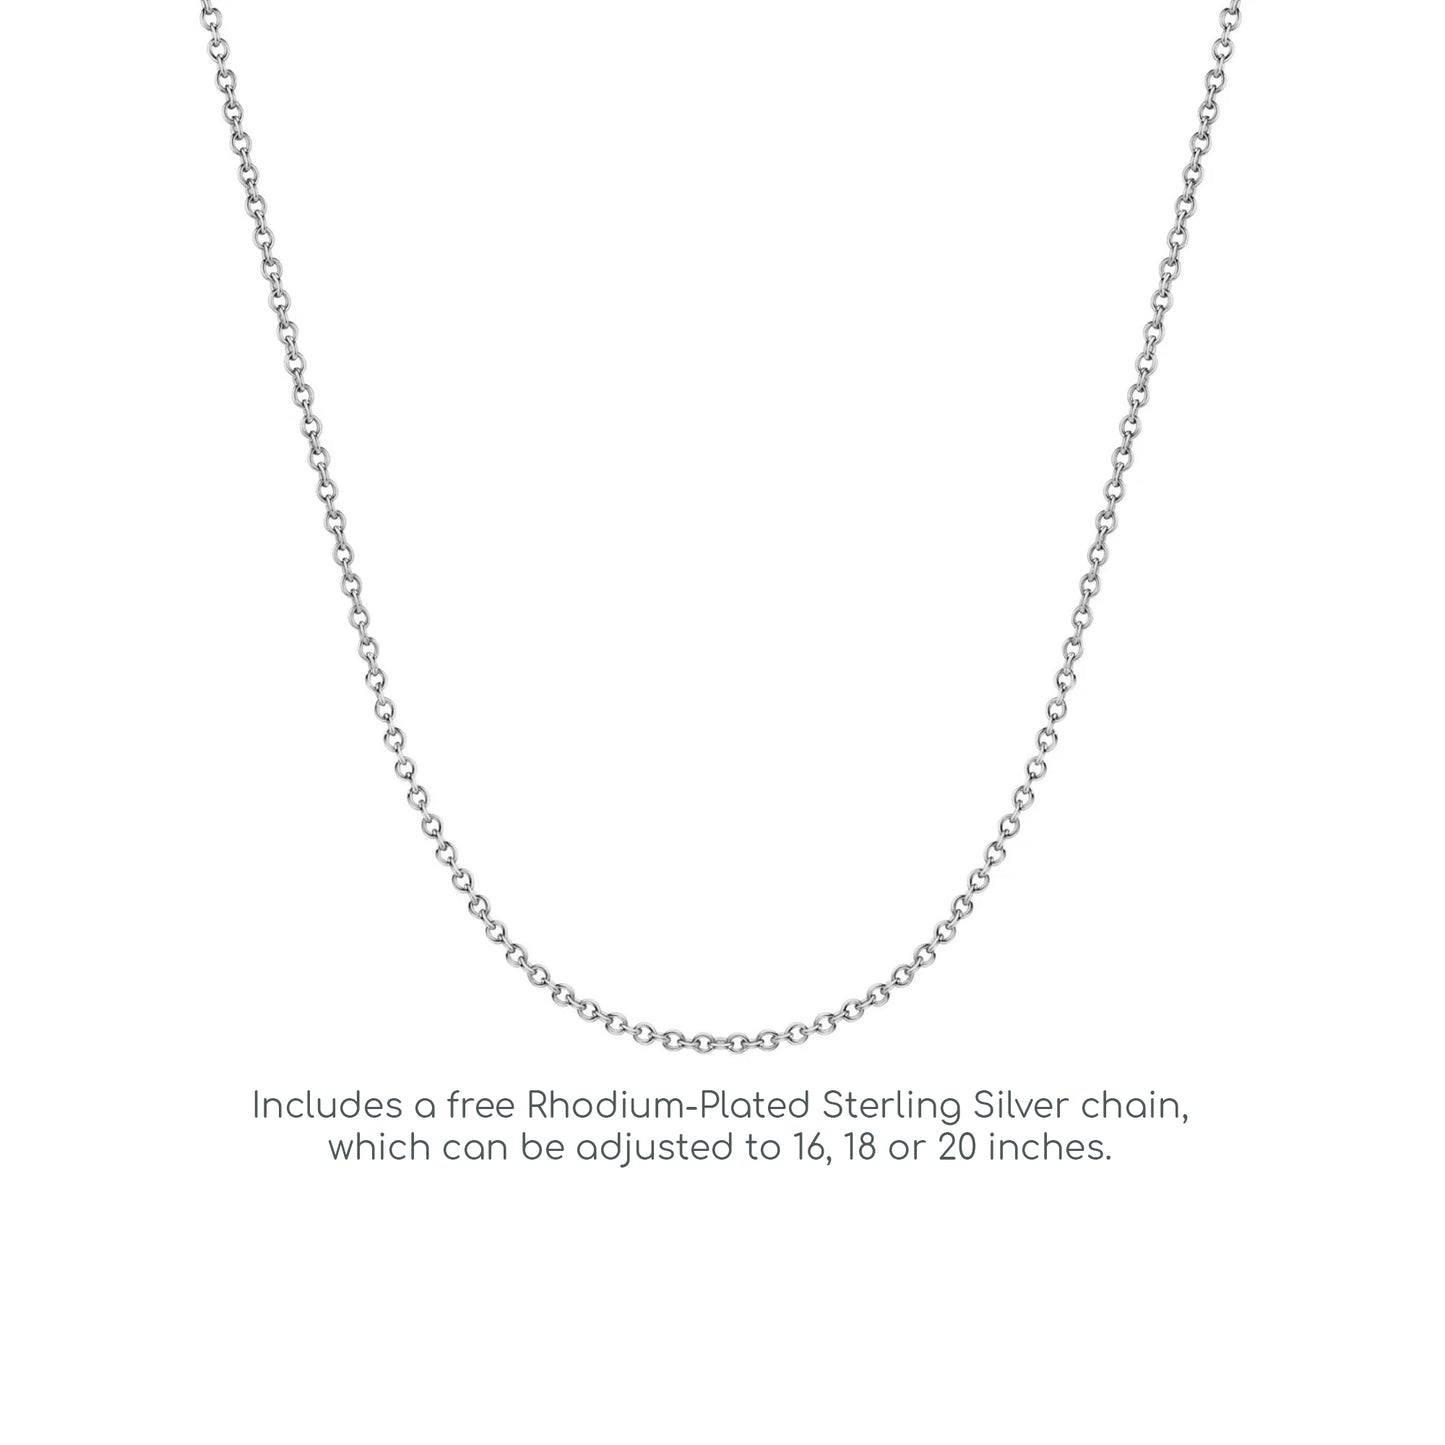 Silver  CZ Spinal Cord Ingot Pendant Necklace 18 inch - GVP503